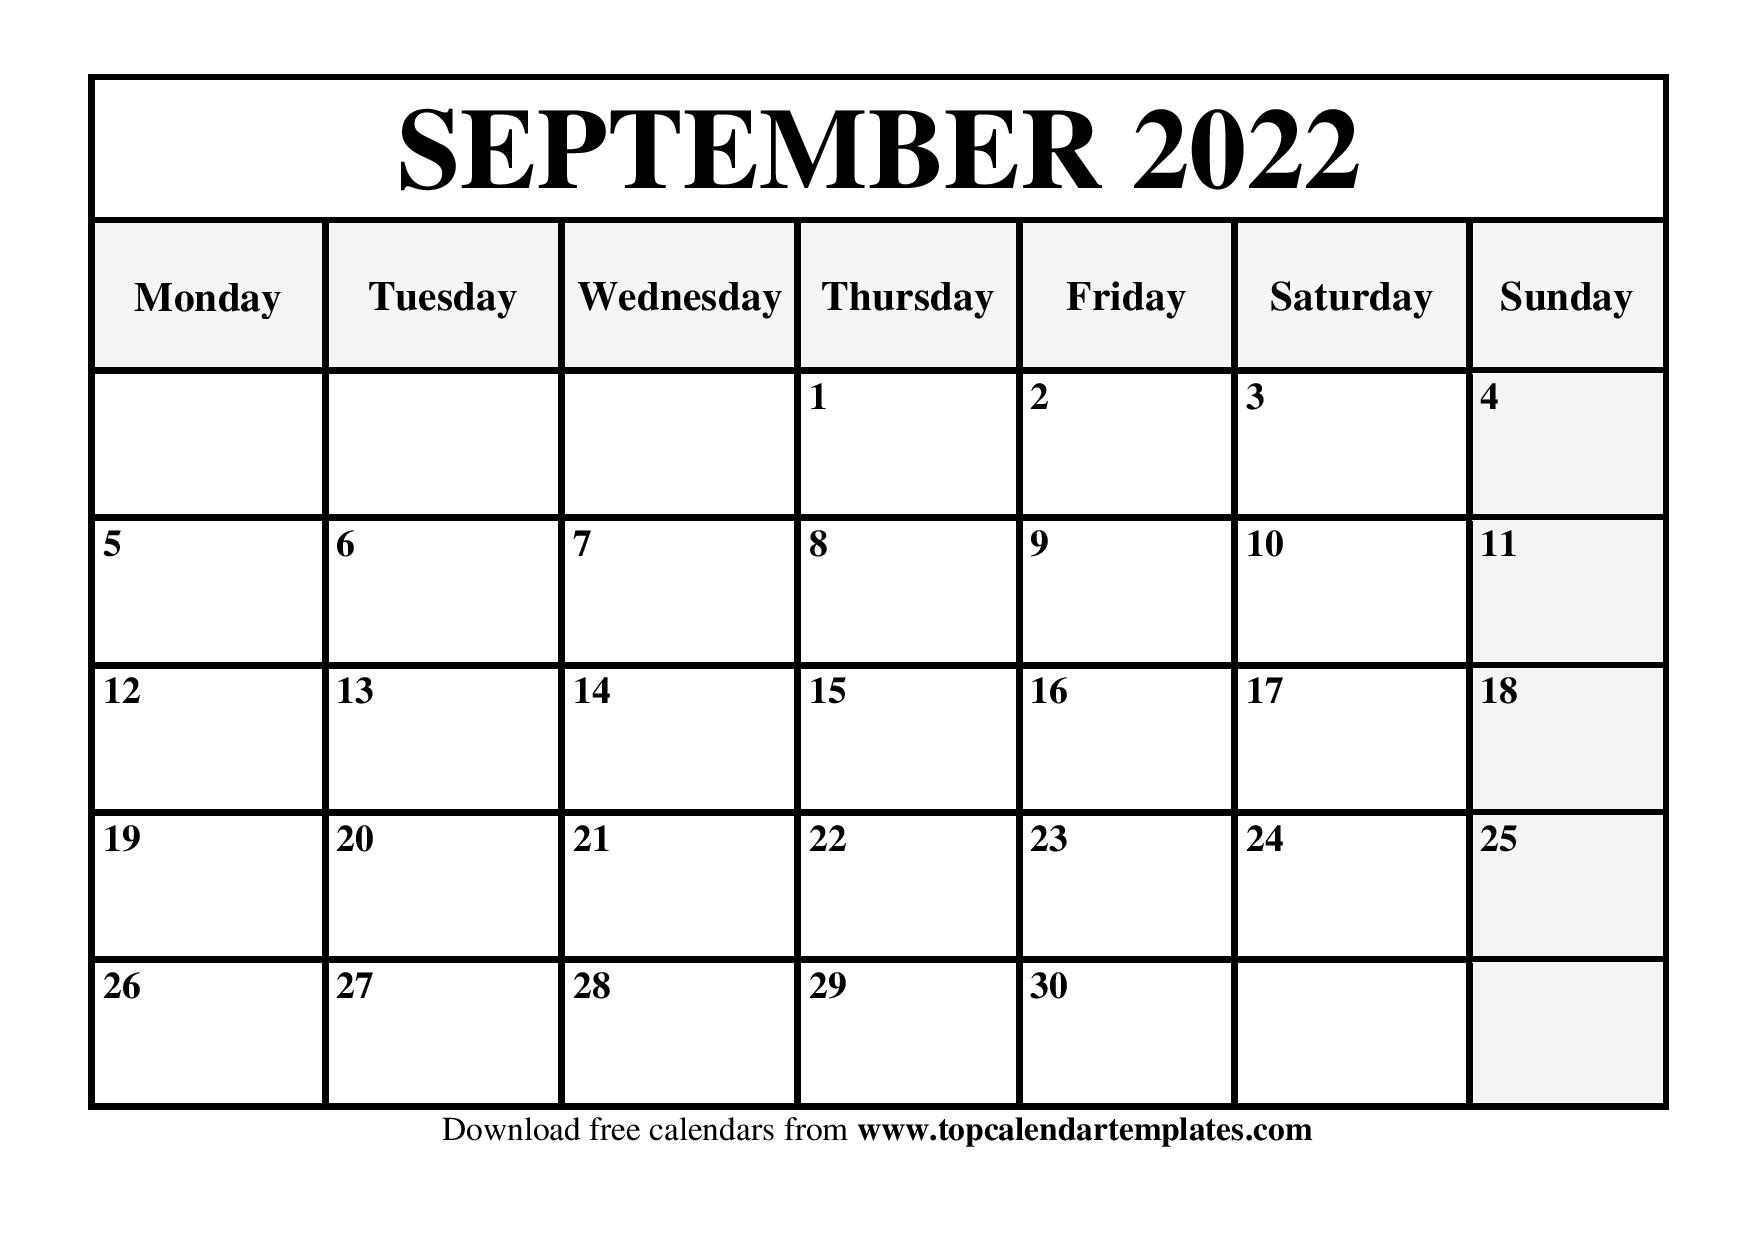 September Calendar 2022 Printable Calendar September 2022 Templates - Pdf, Word, Excel